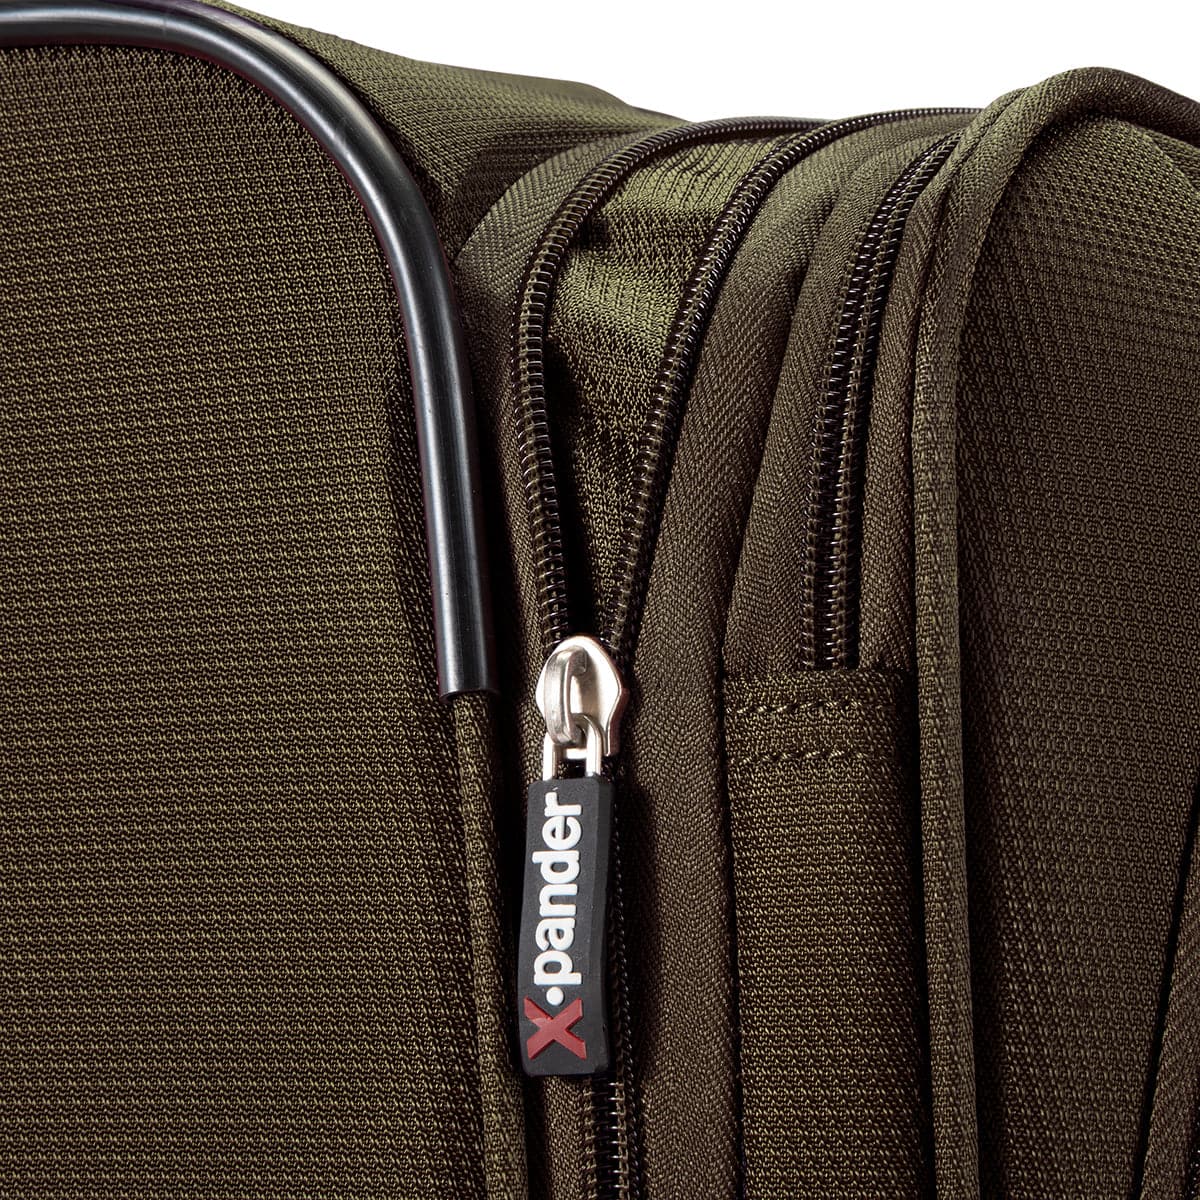 Ricardo Beverly Hills Hermosa Soft Side Medium Check-In Luggage